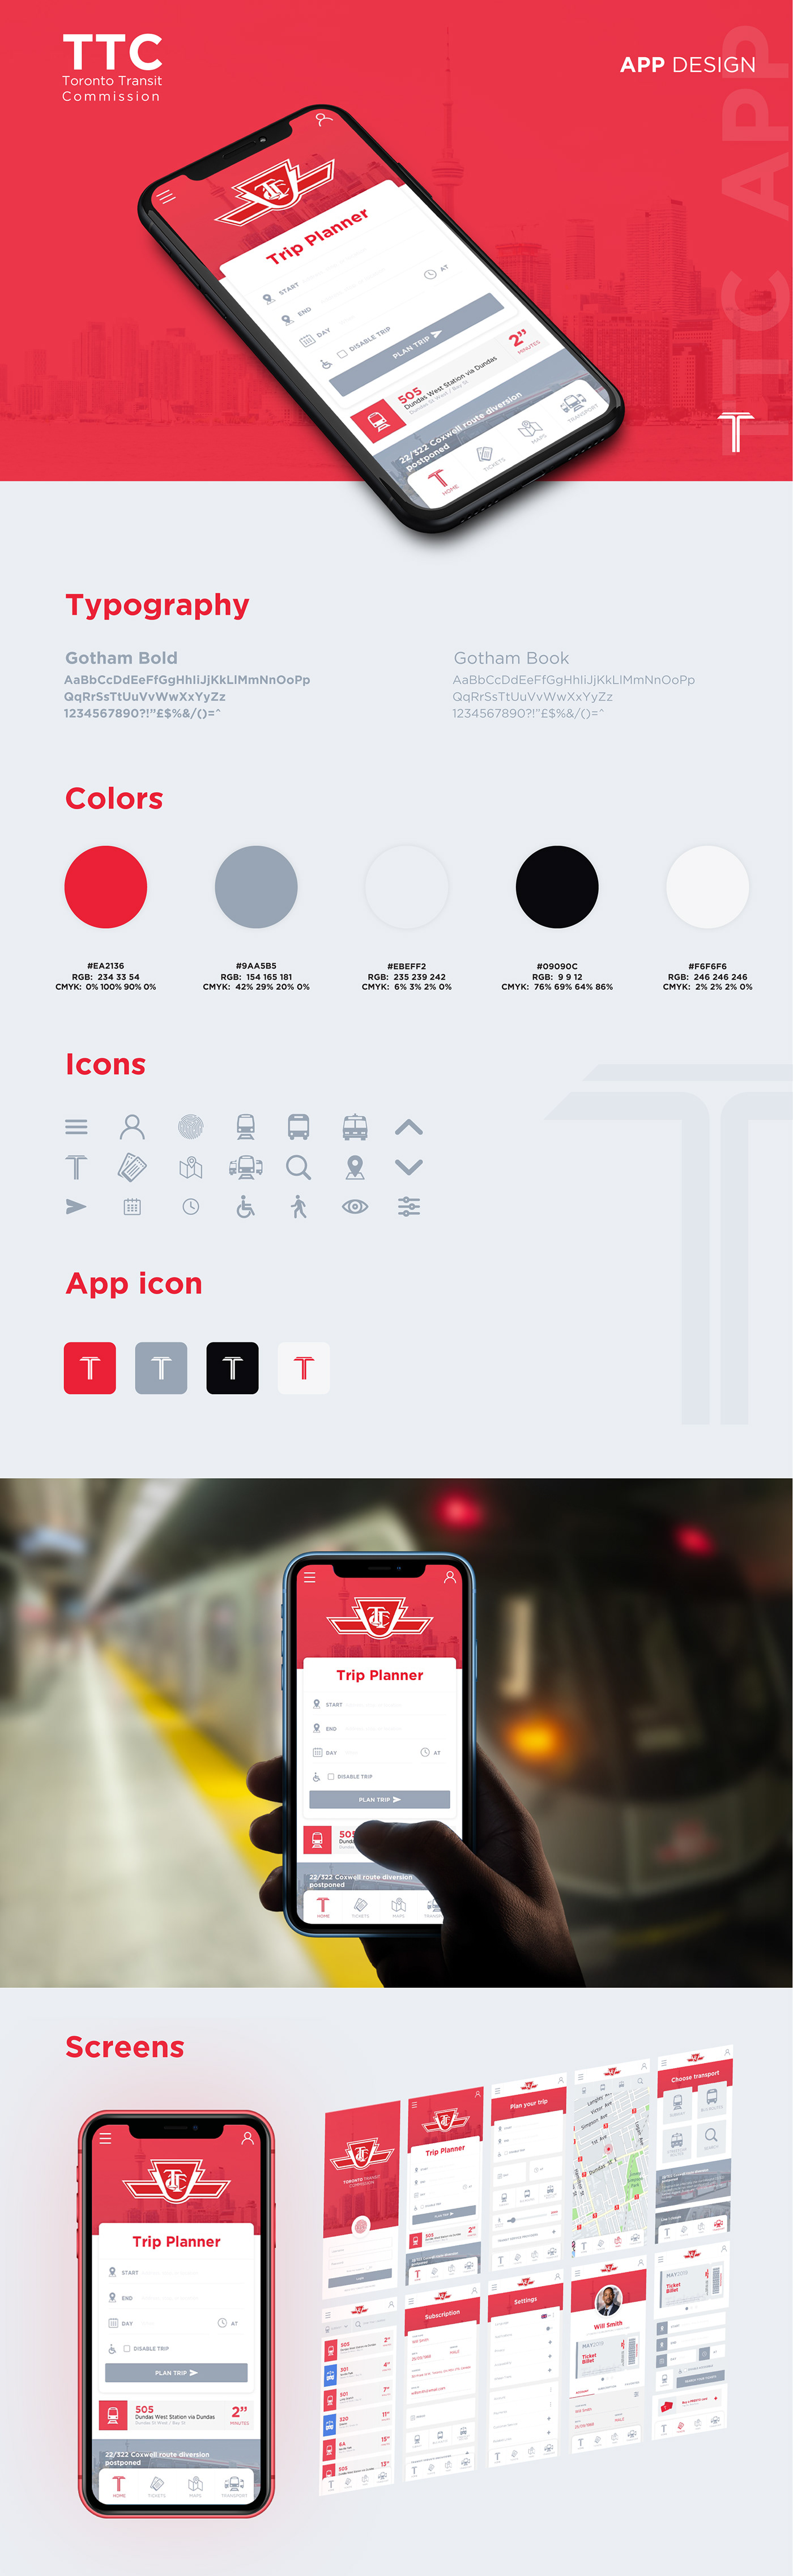 UI ux interaction animation  Appdesign ttc Toronto subway design Canada